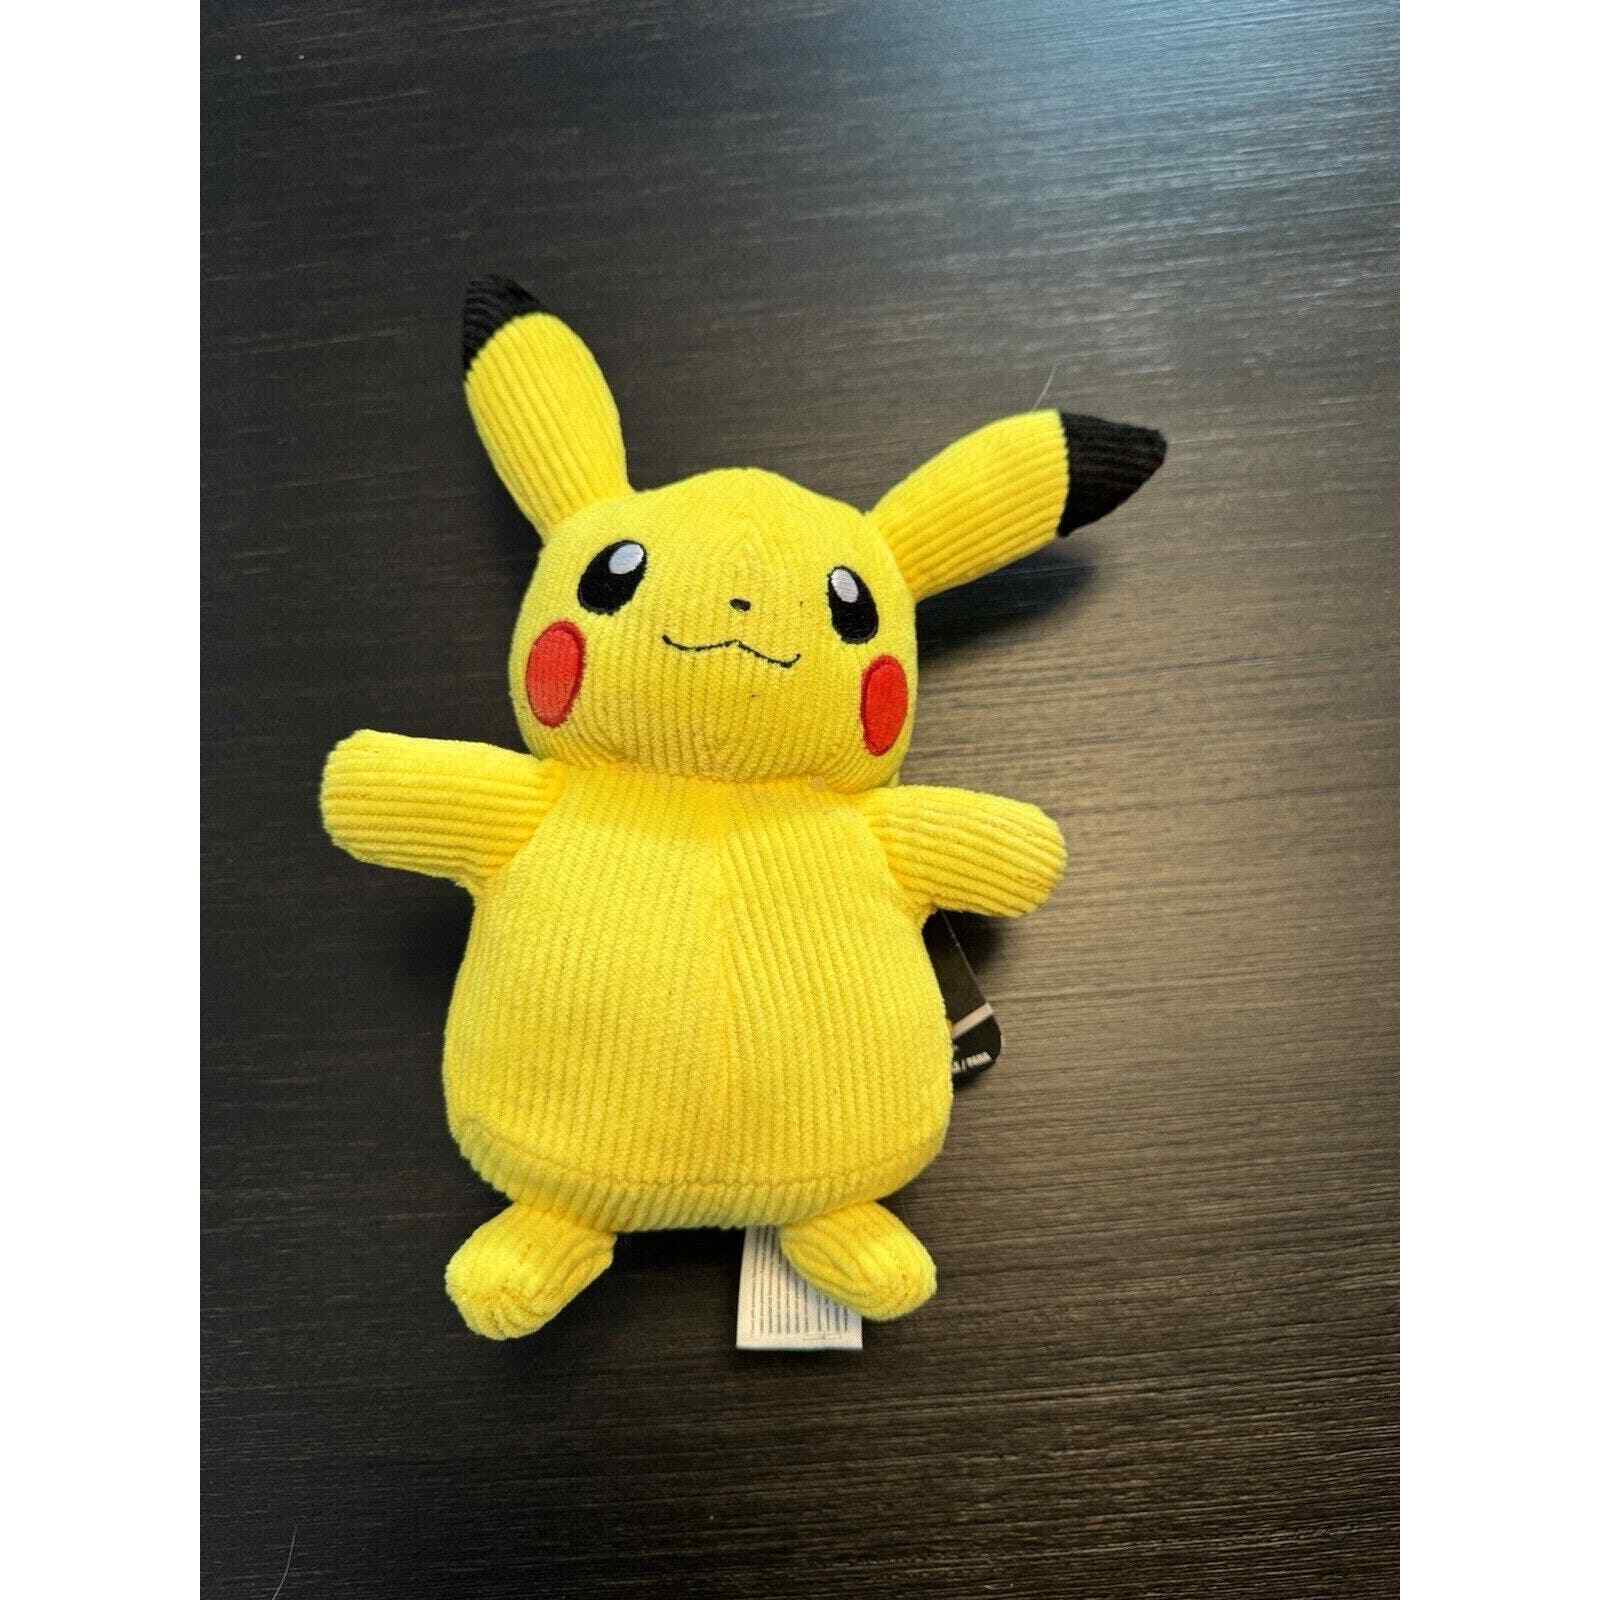  Pikachu 10